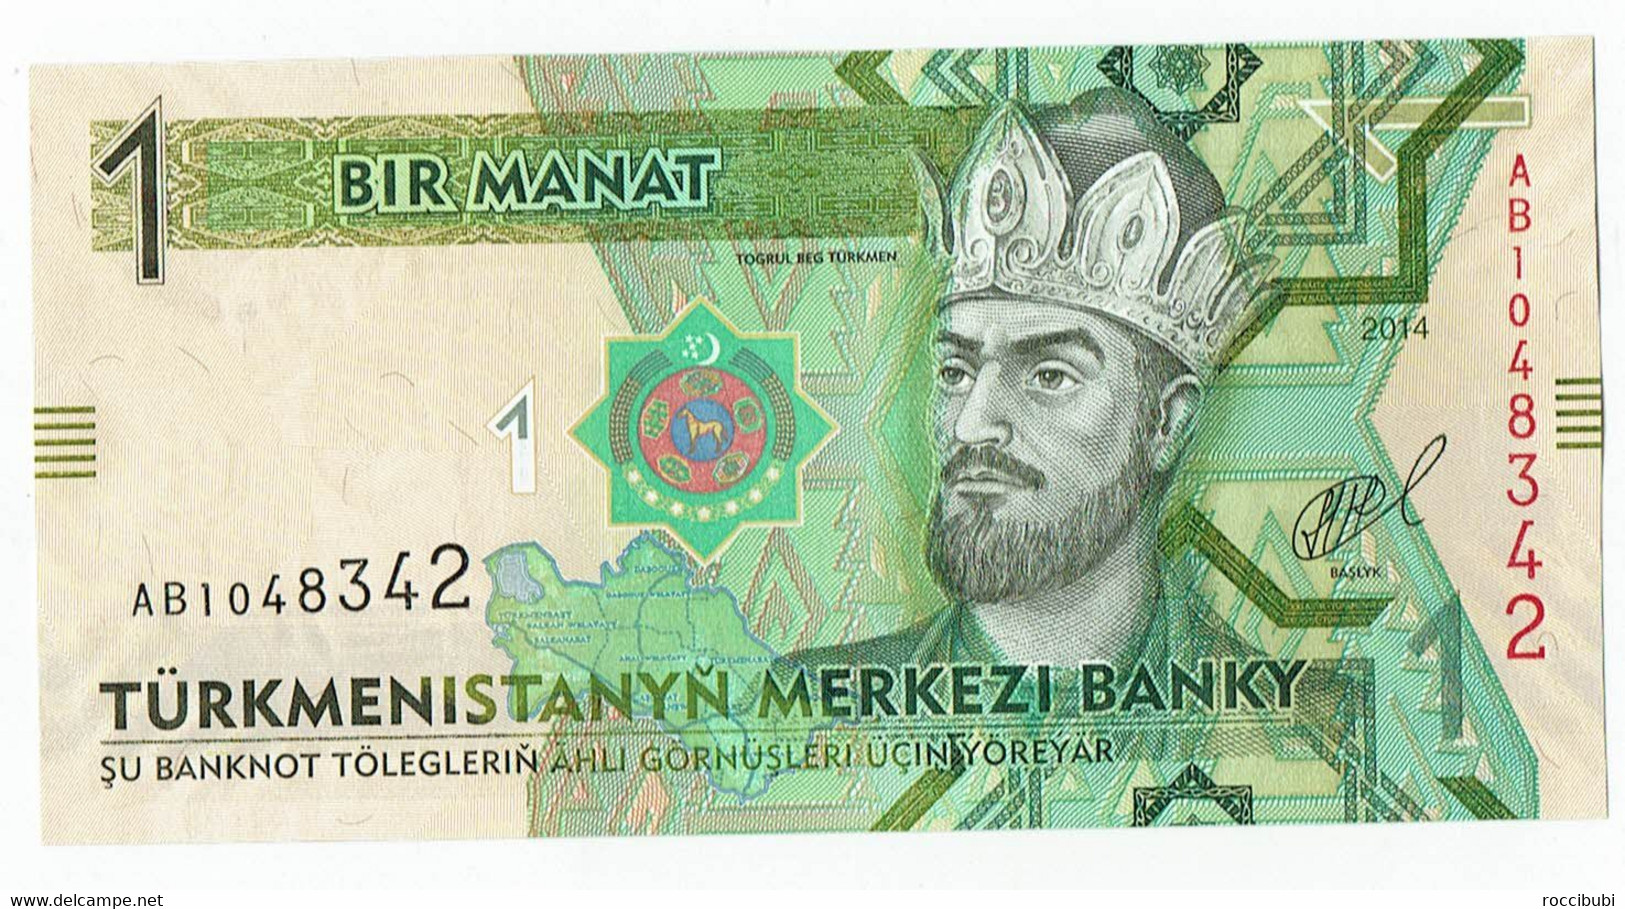 Turkmenistan, Banknote - Turkménistan